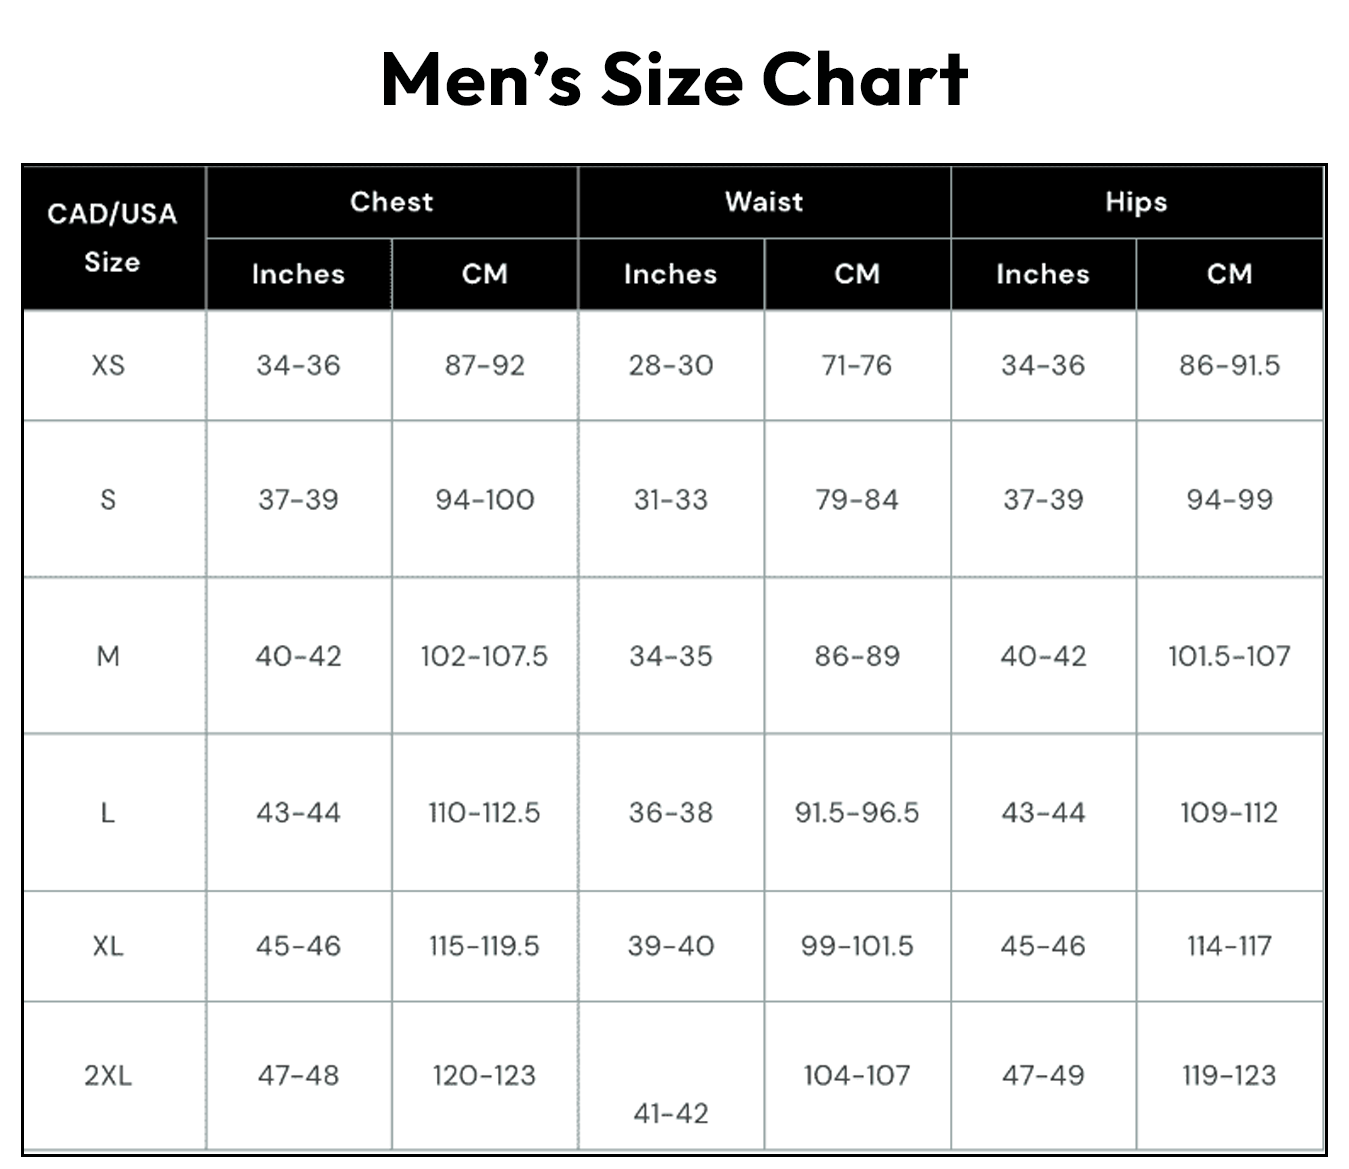 Men's Bottoms Size Chart.